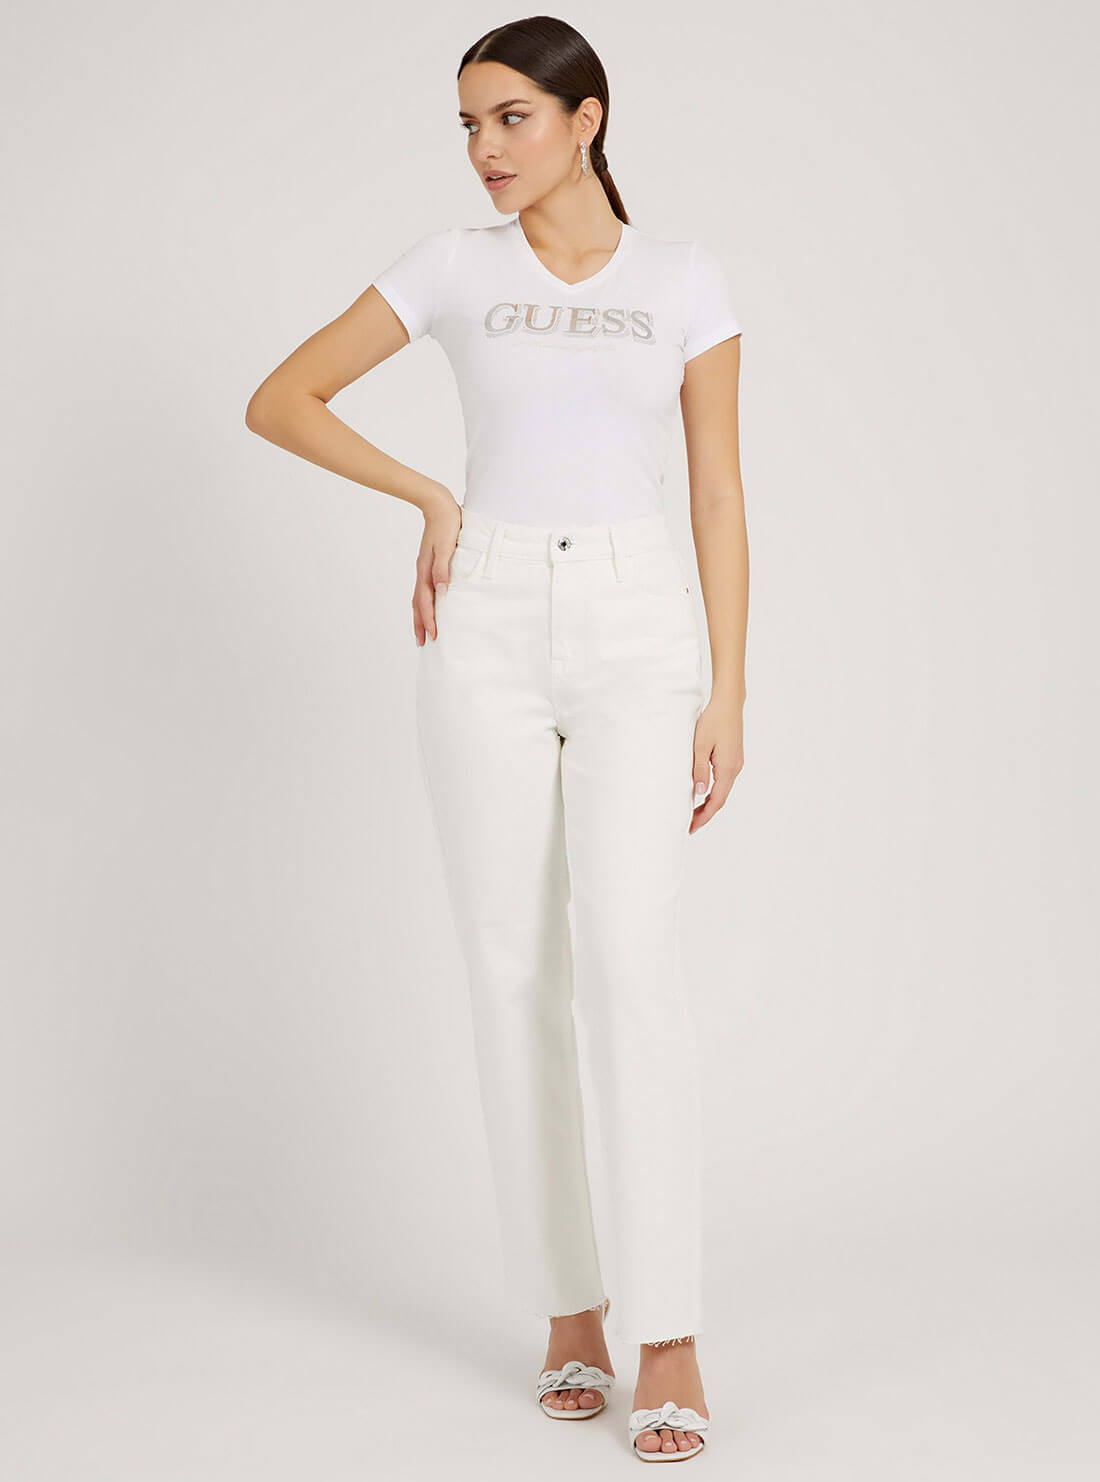 GUESS Womens White Trine Logo T-Shirt W2GI05J1300 Full View